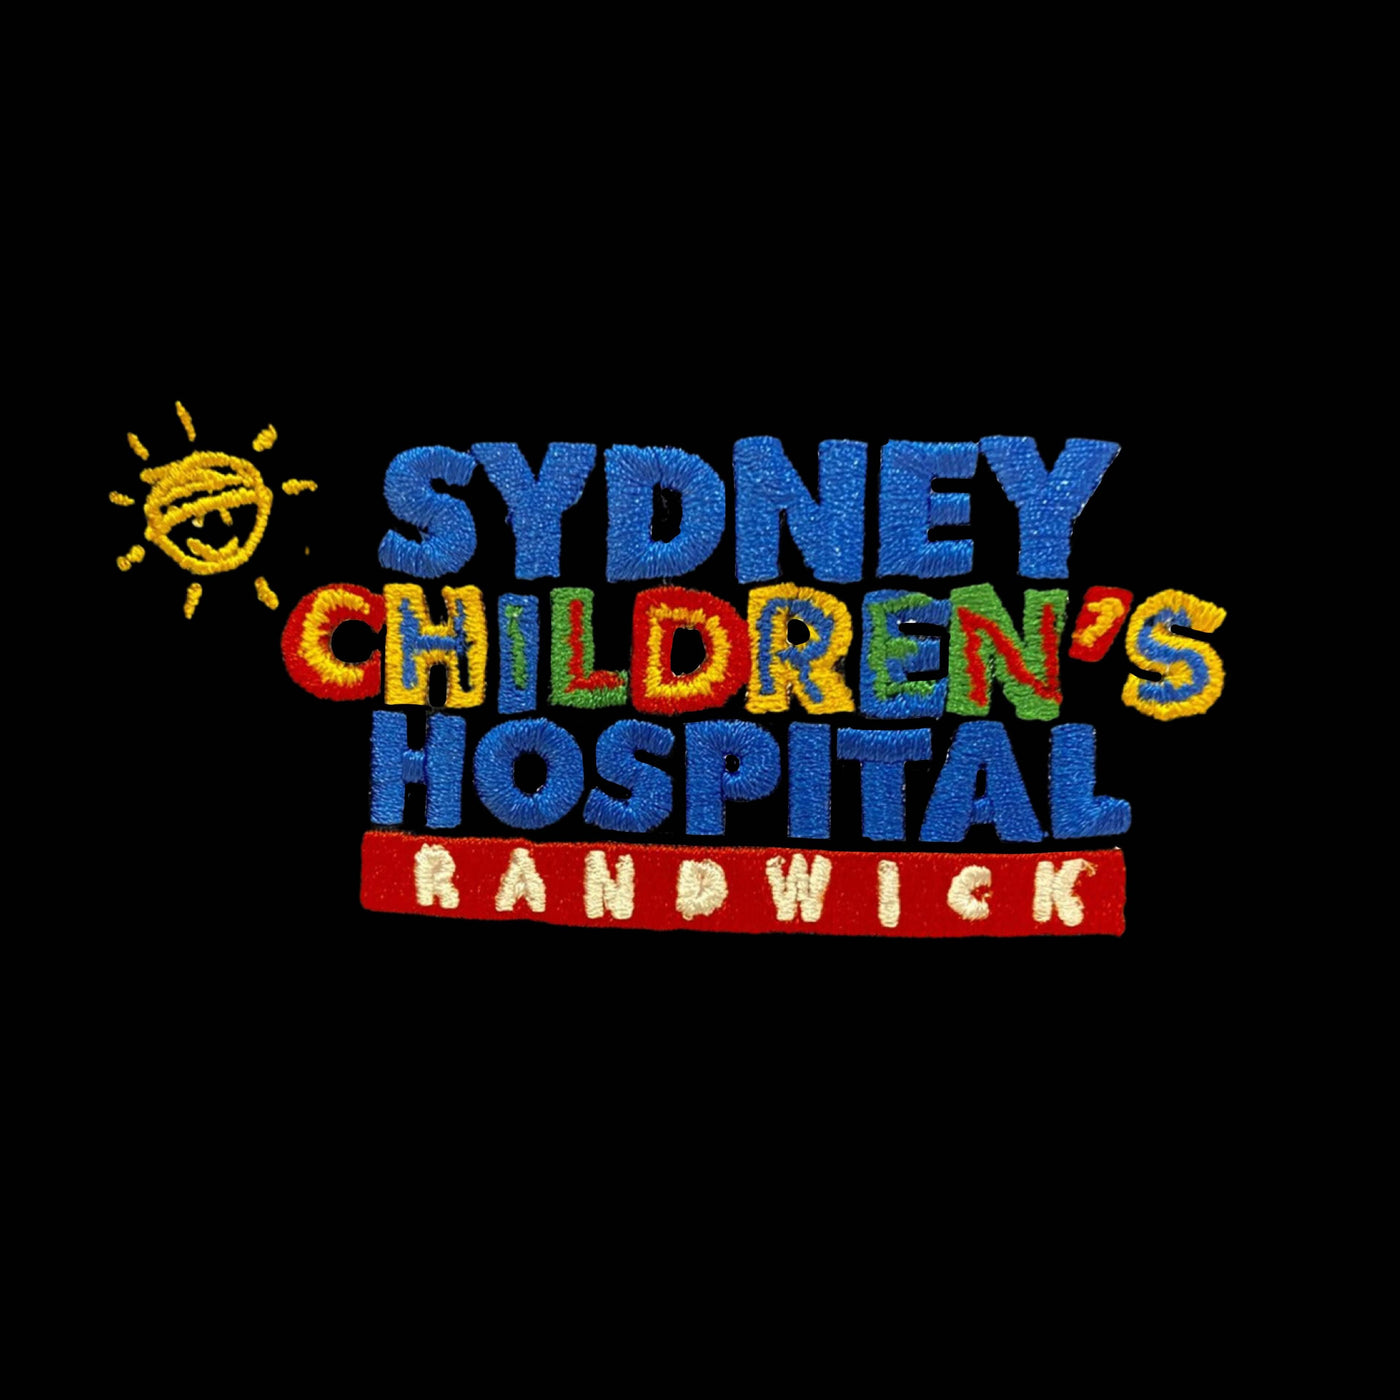 Embroidery Stock Logos - Sydney Children's Hospital Randwick